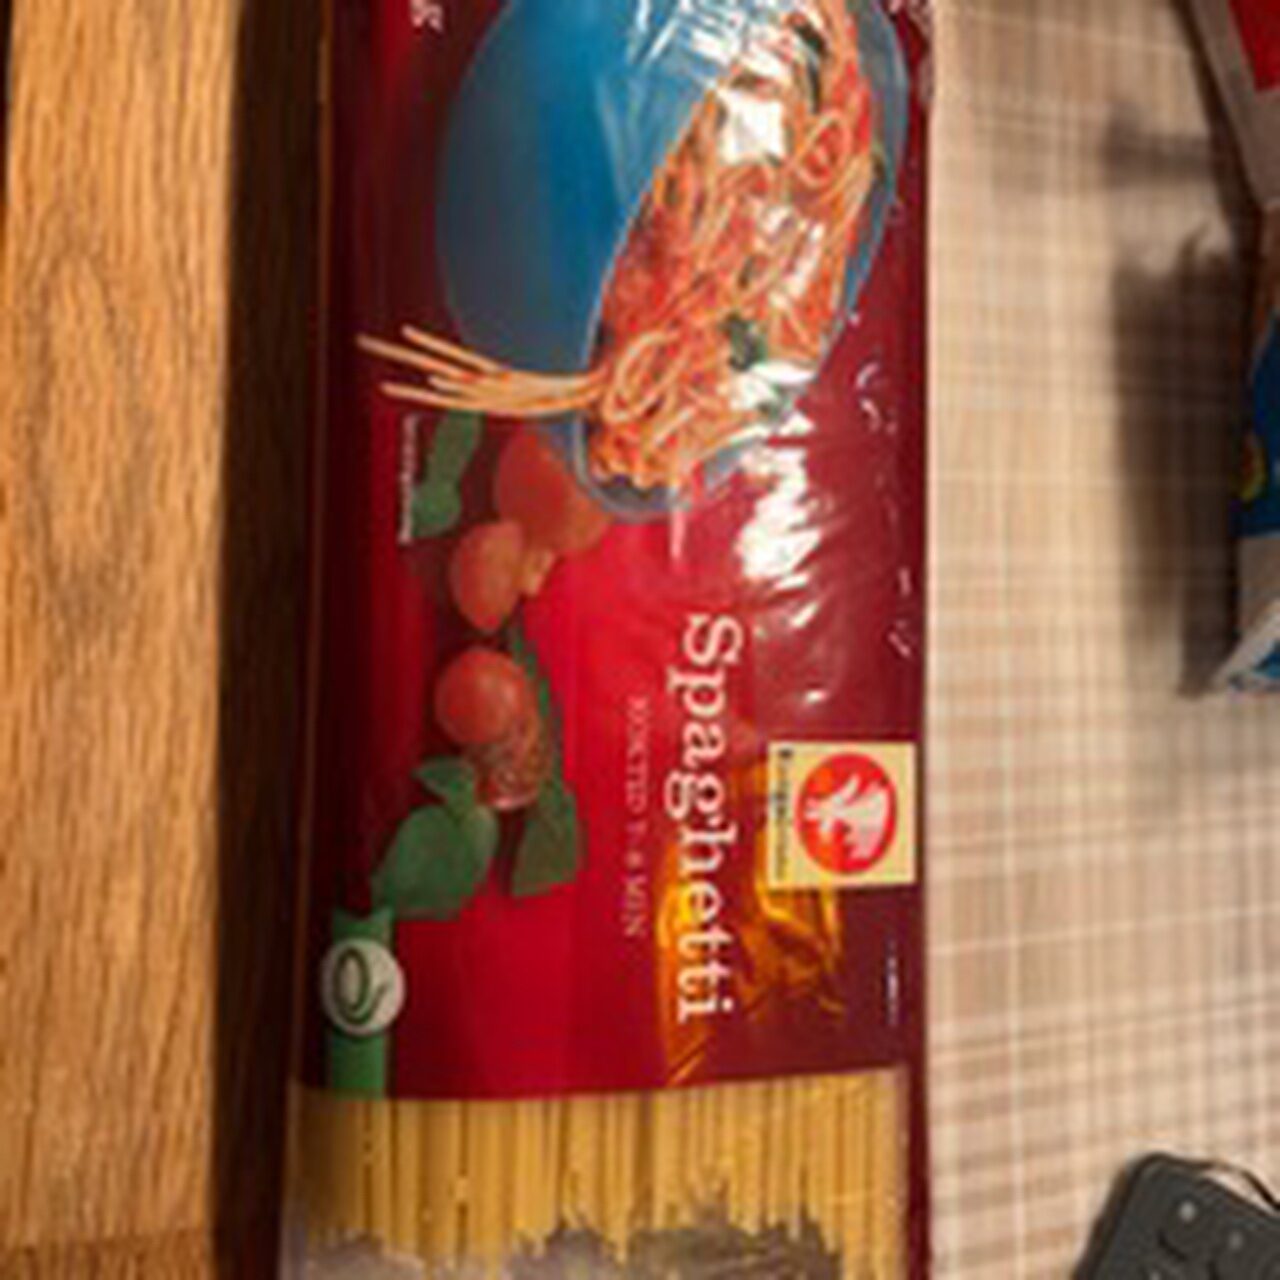 Spaghetti - Produkt - en